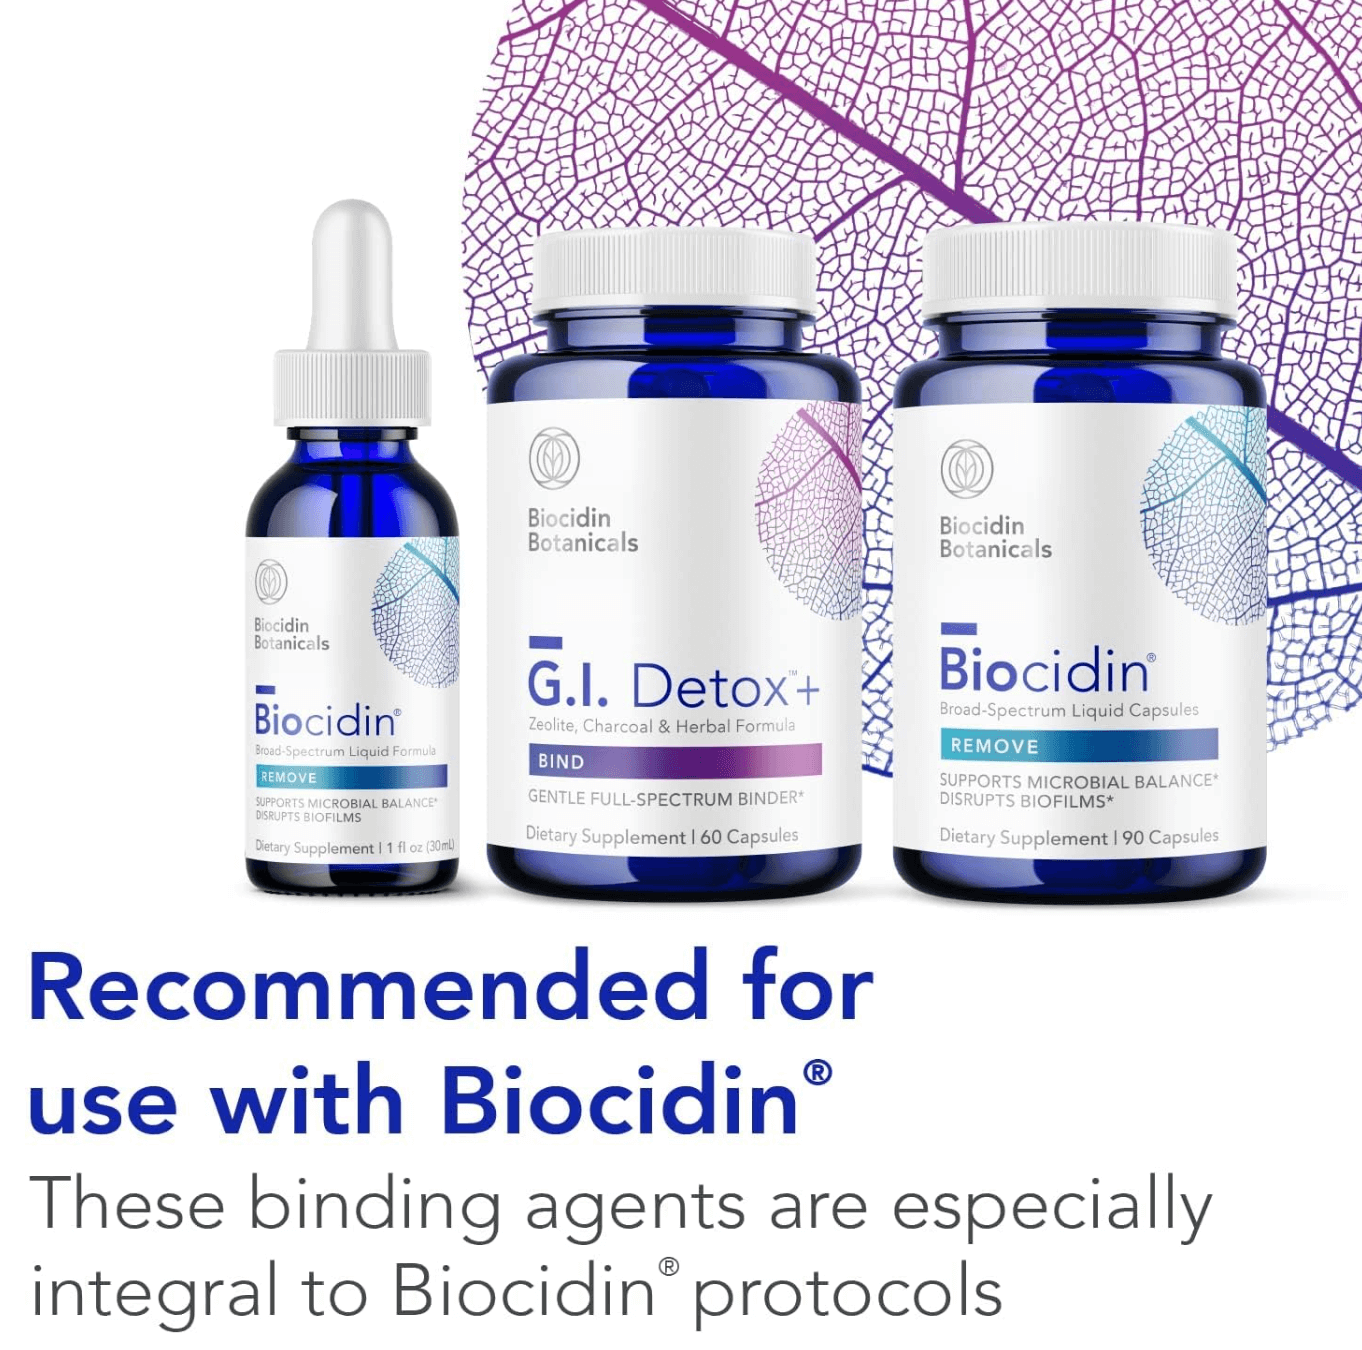 Biocidin Botanicals GI Detox+ Capsules